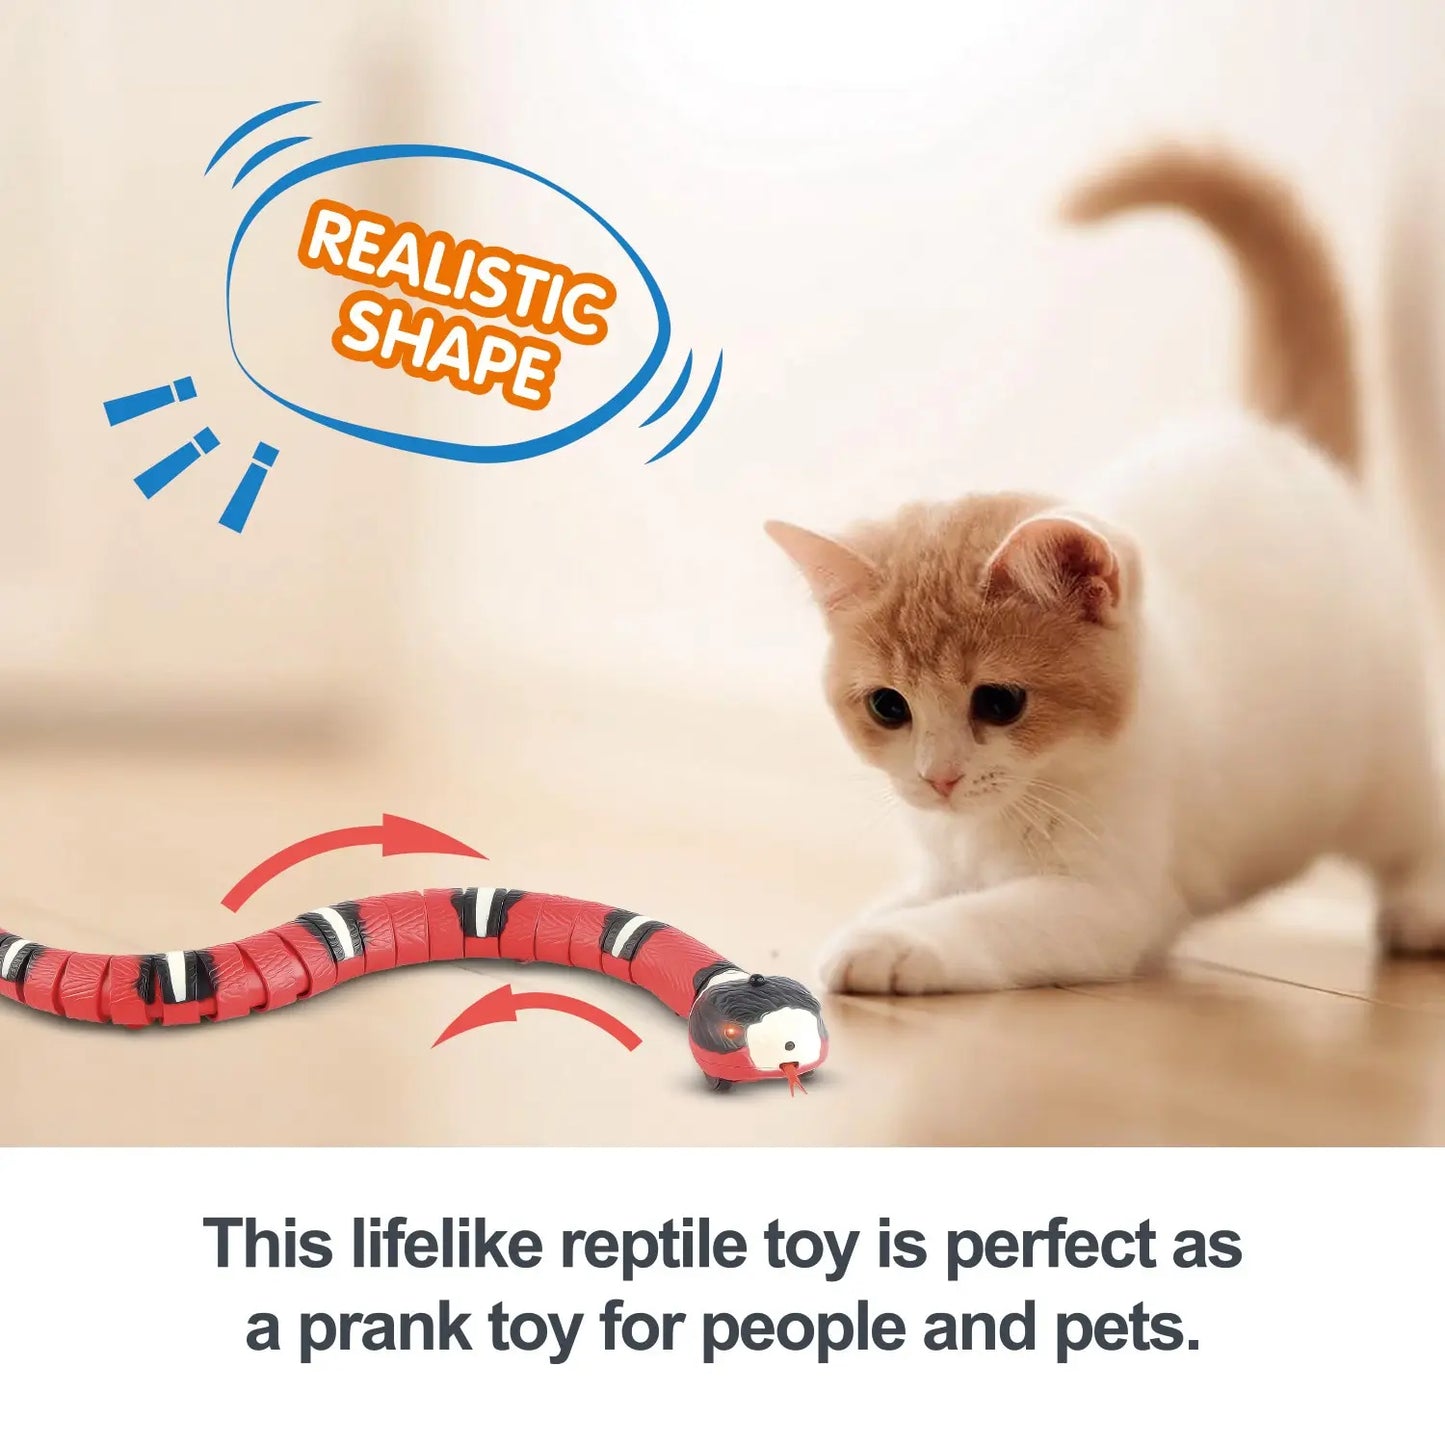 Smart Sensing Cat Toy, Snake is realistic looking